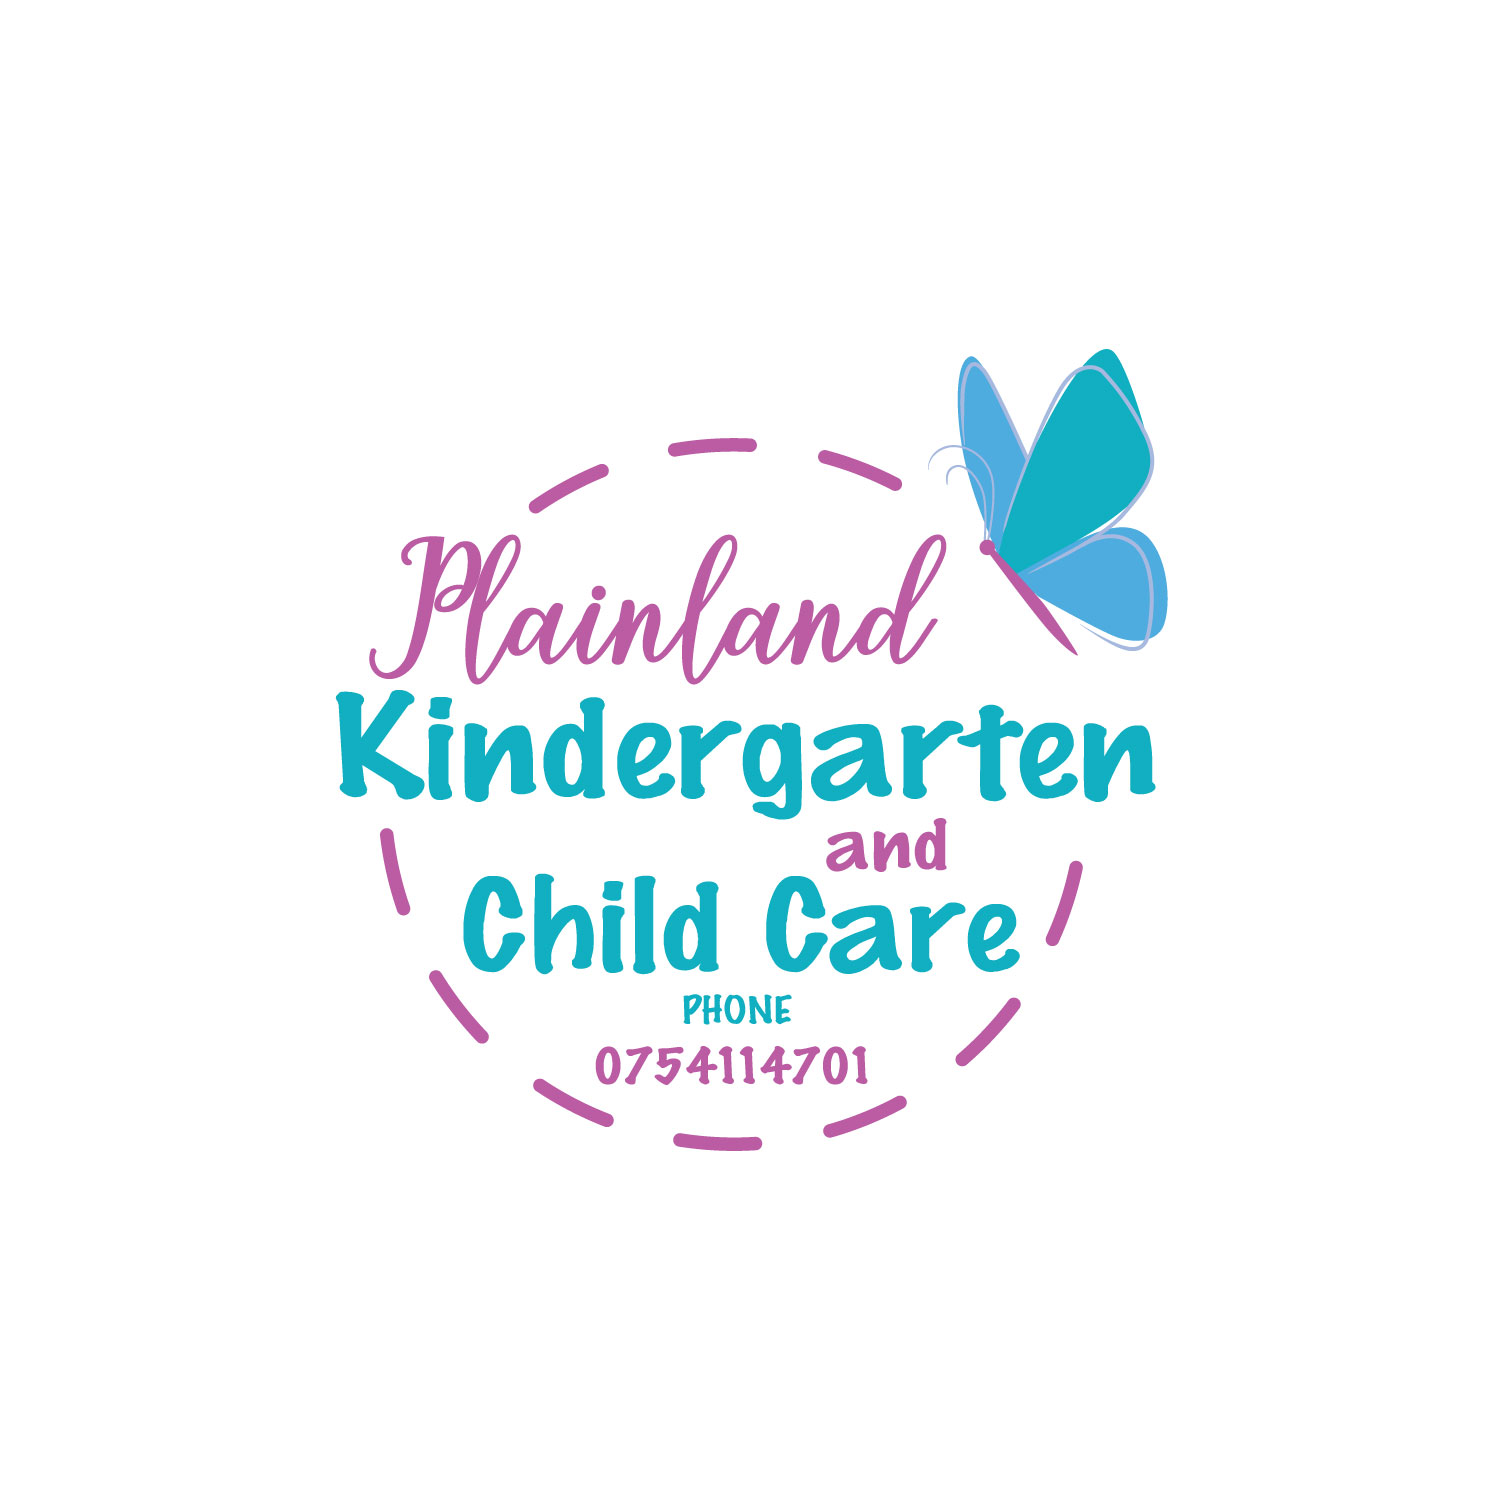 Plainland Kindergarten & Child Care Logo